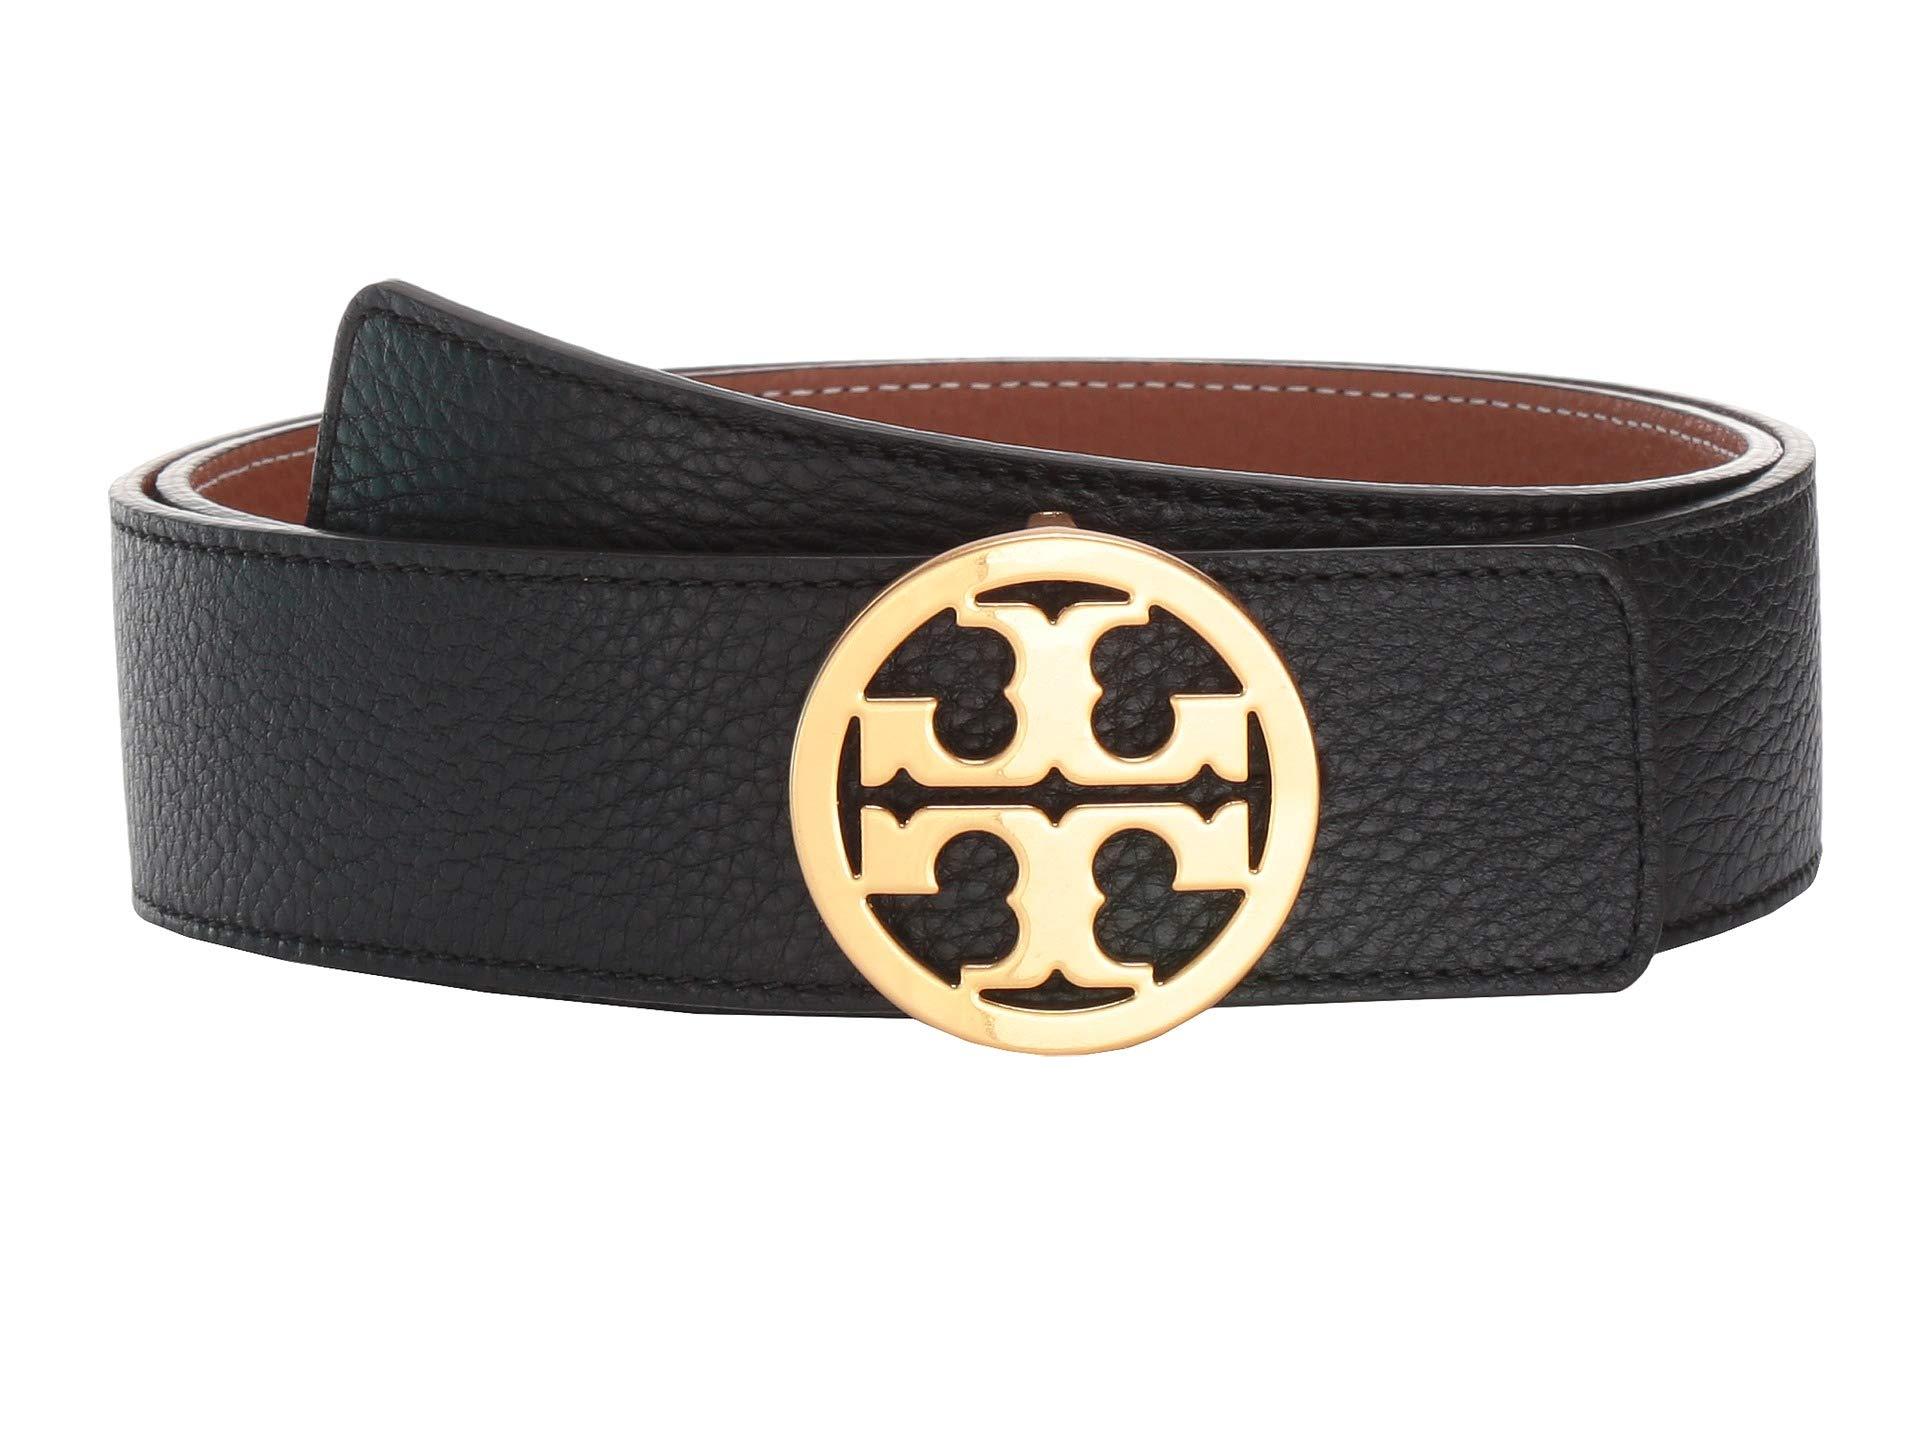 Tory Burch Leather 1.5 Reversible Logo Belt in Black/Tan (Black) - Lyst